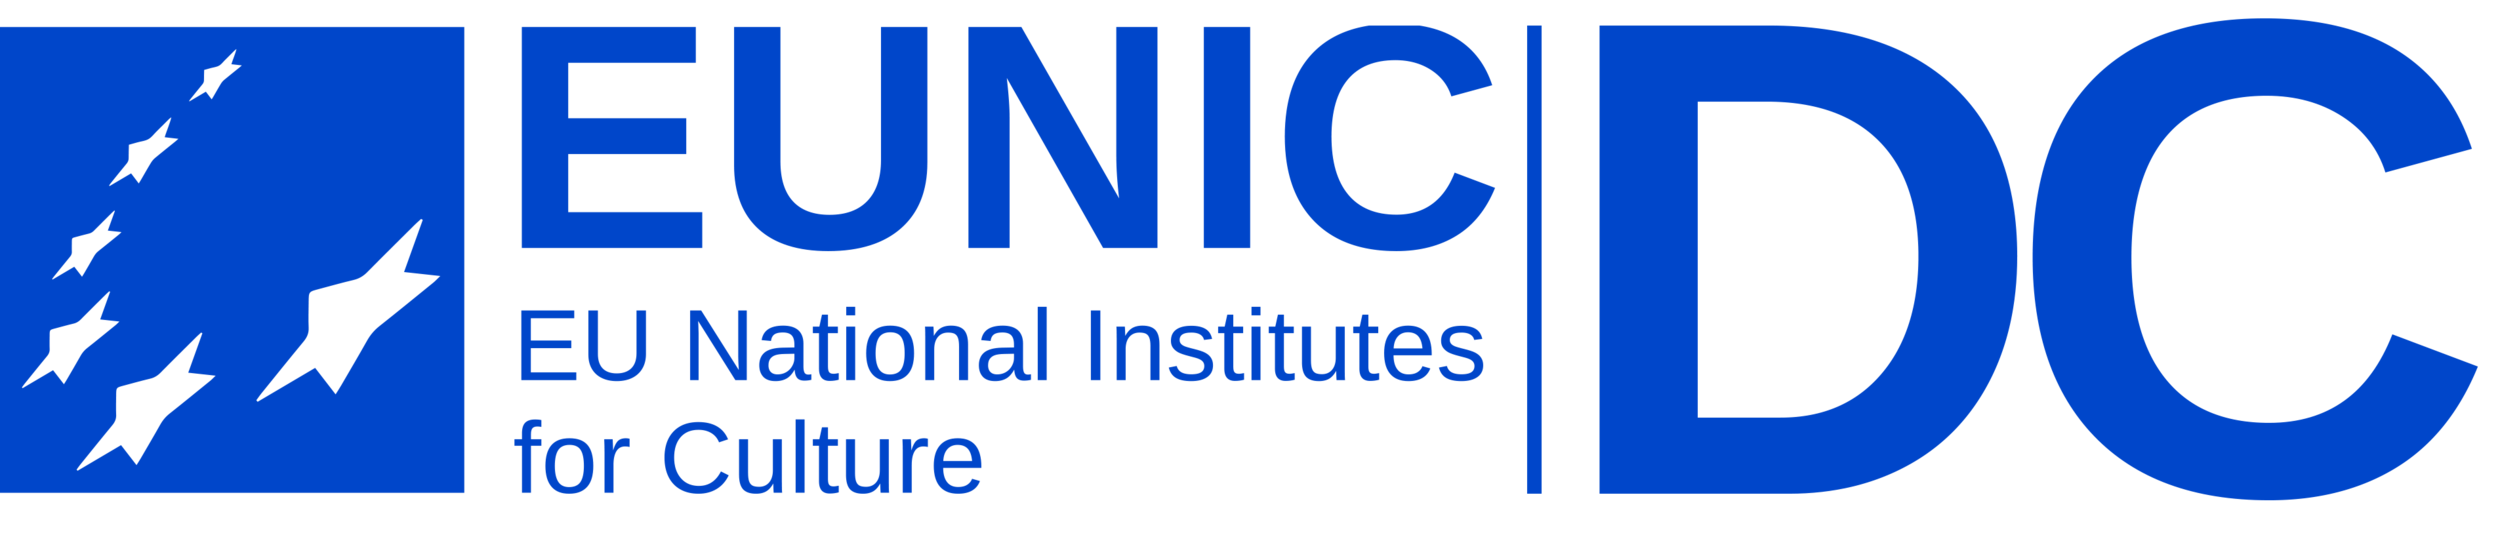 EUNIC_DC - Logo HR png.png